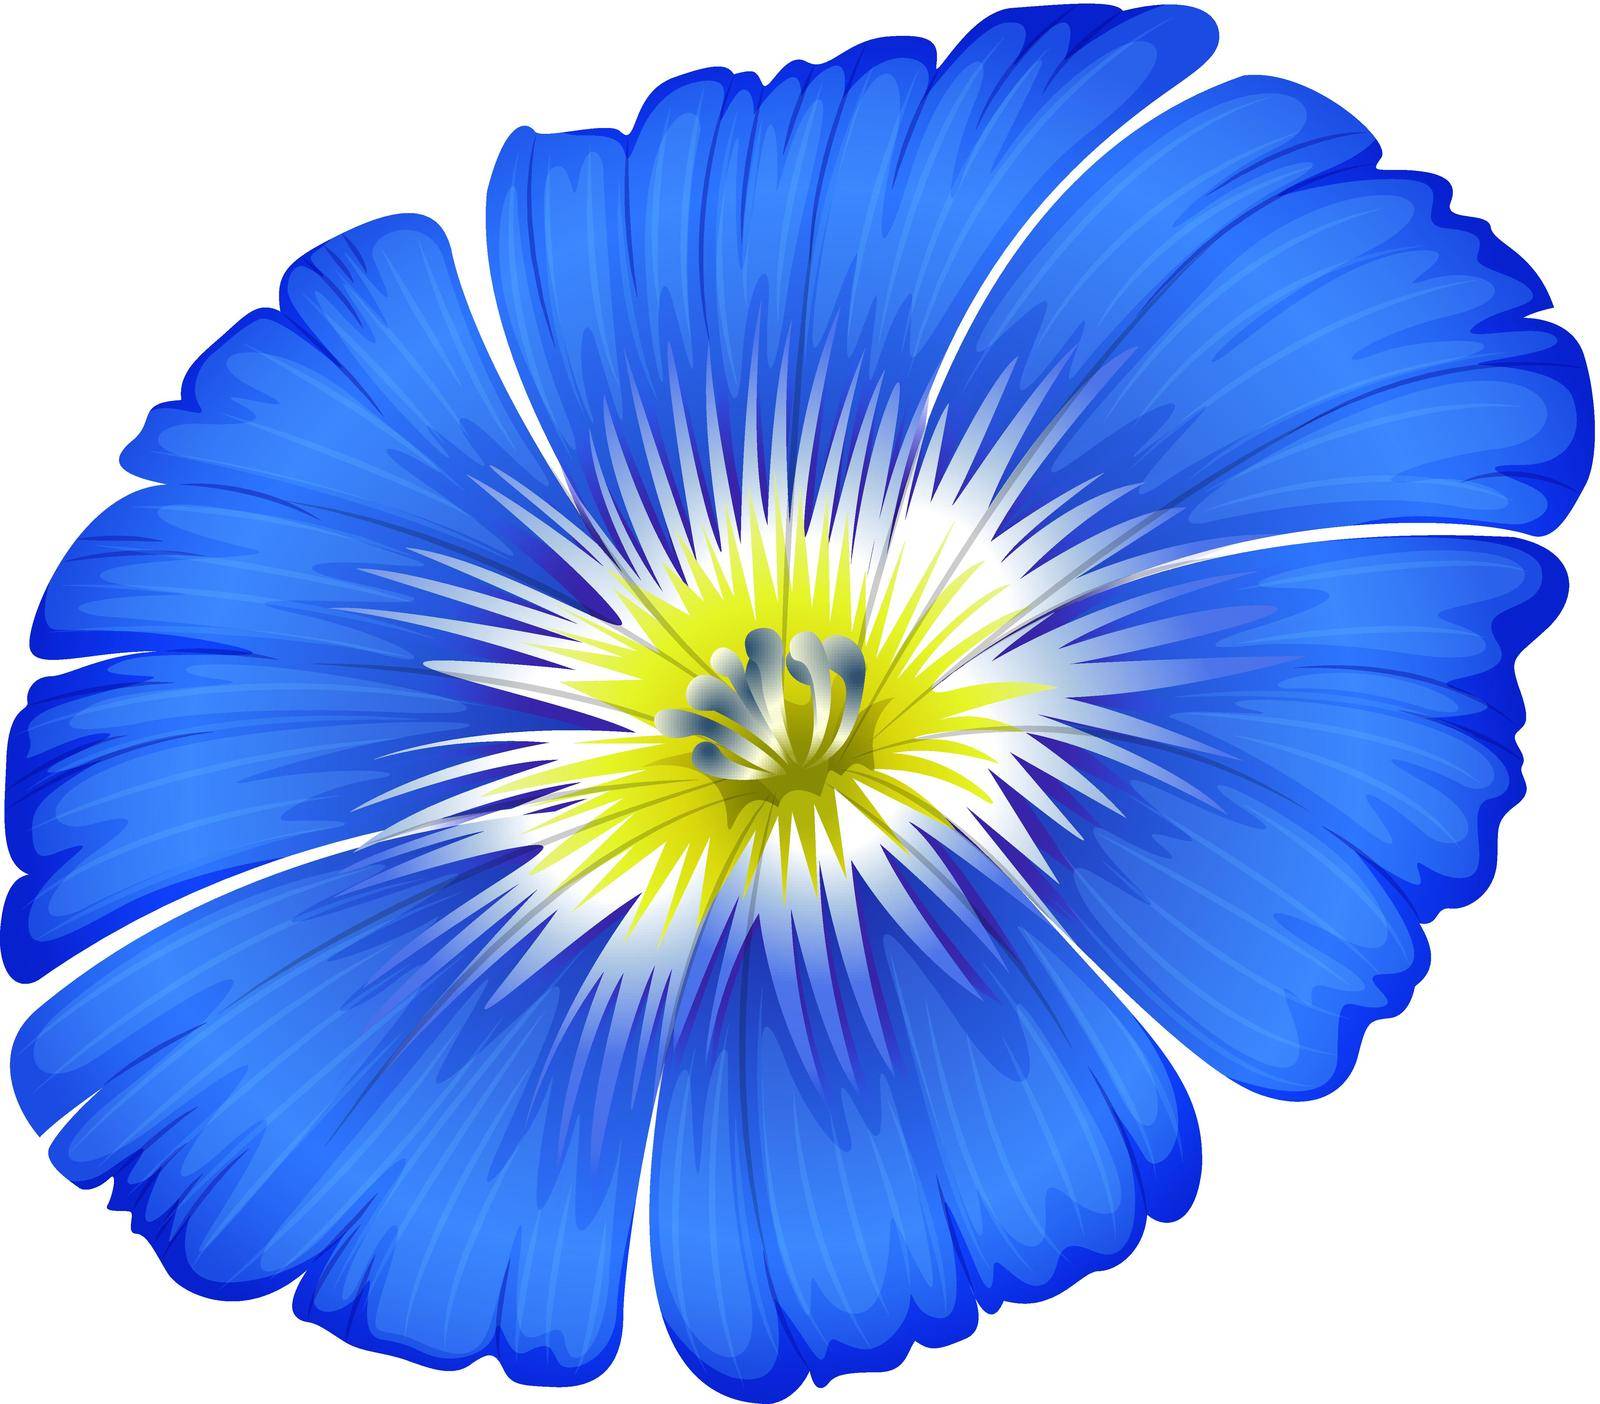 A blue blooming flower by iimages